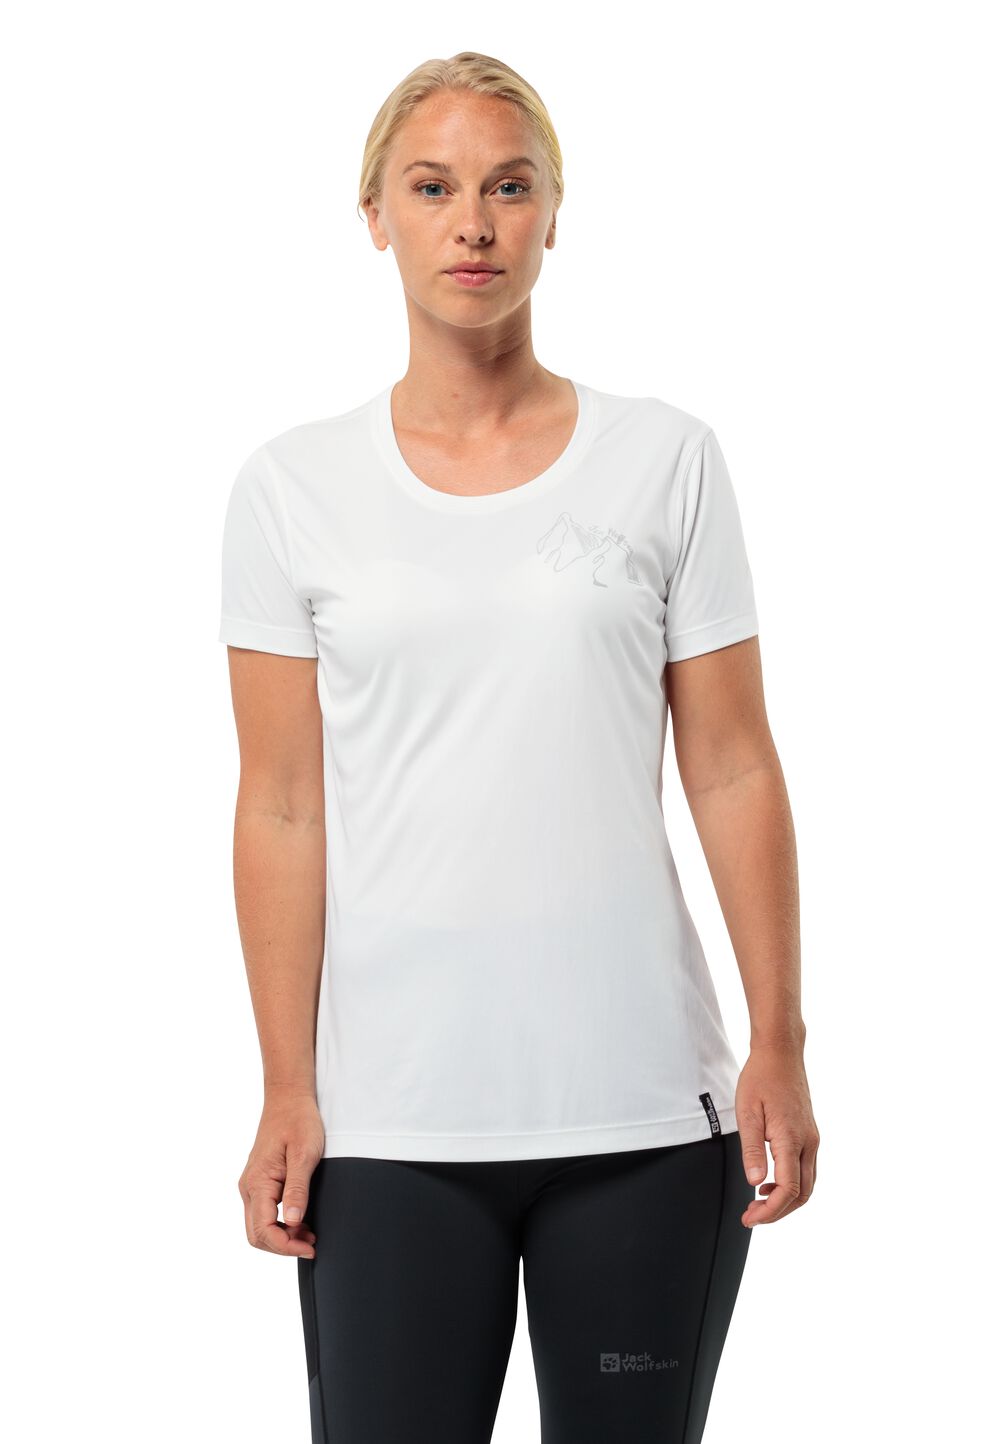 Jack Wolfskin Peak Graphic T-Shirt Women Functioneel shirt Dames XS wit stark white